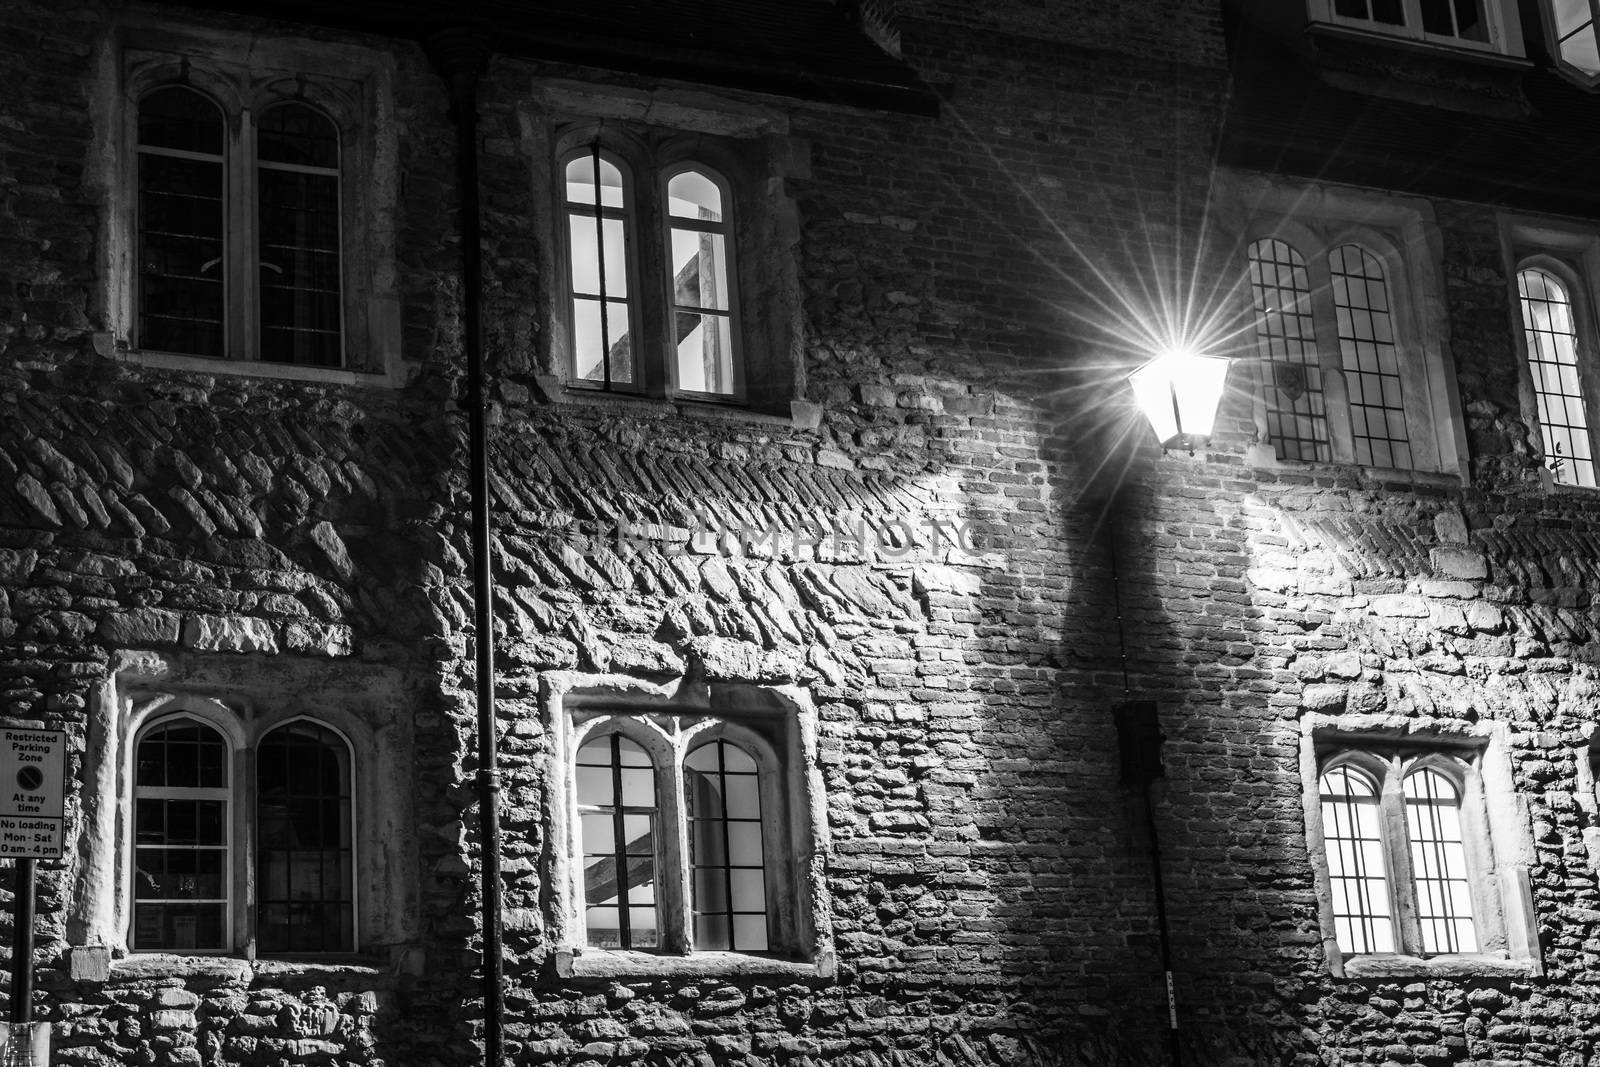 Illuminated windows and brick wall in Trinity Lane at night, Cambridge, United Kingdom